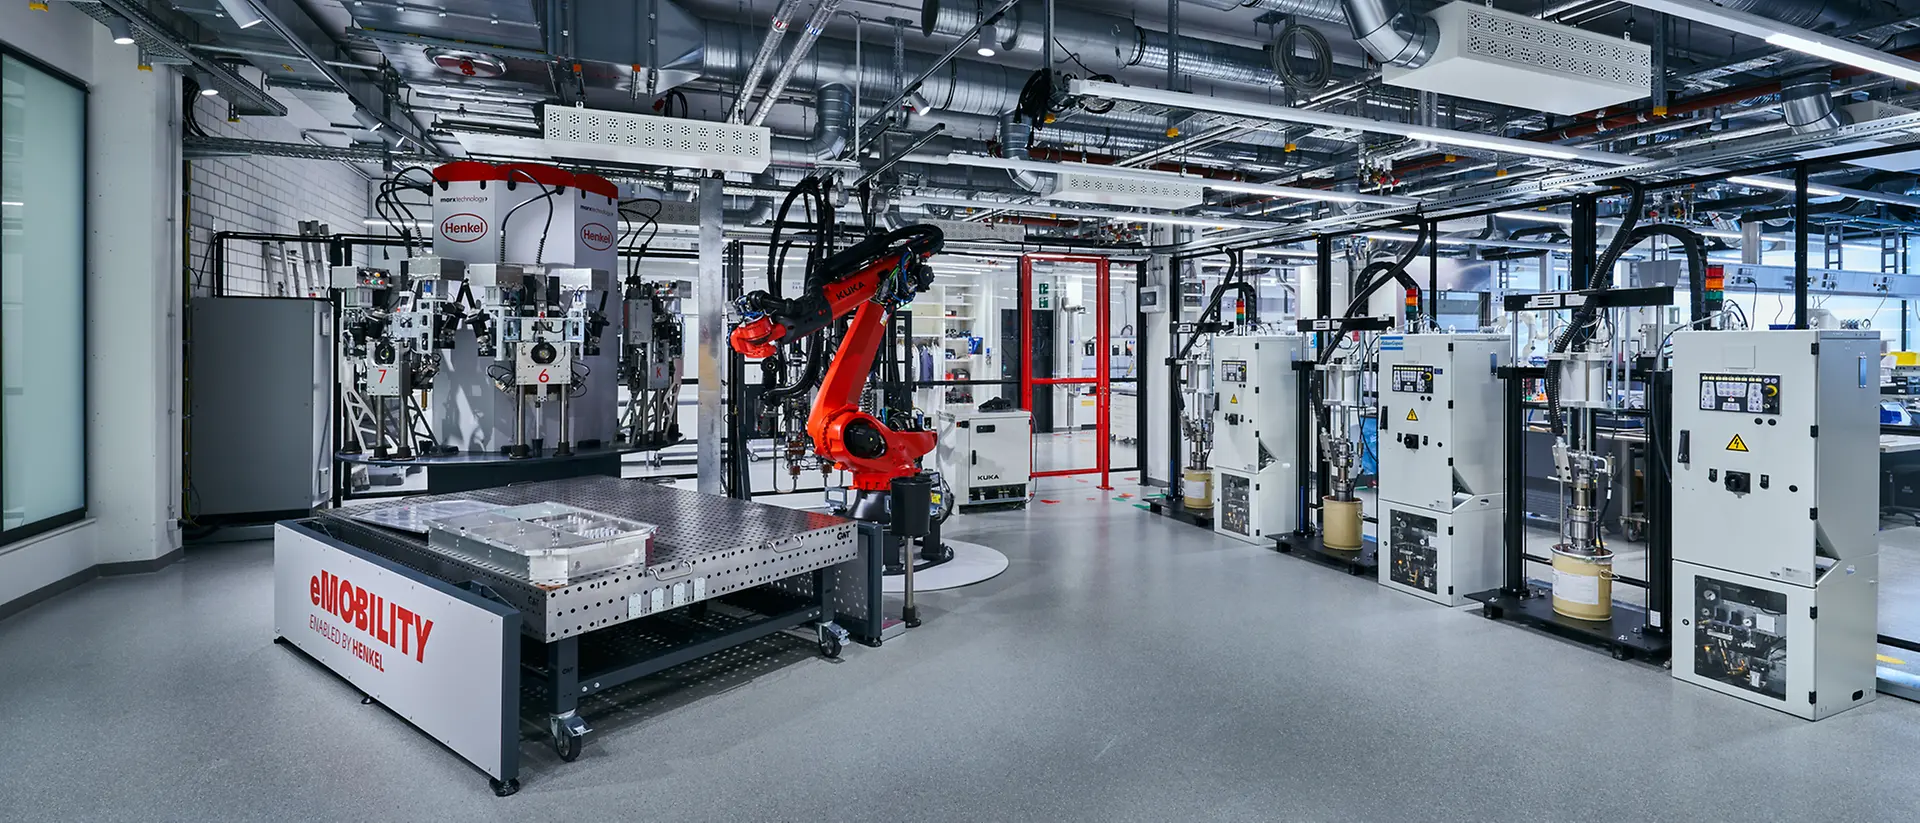 The Battery Application Center laboratory serves as an innovation hub for EV battery technology at the Inspiration Center Düsseldorf.